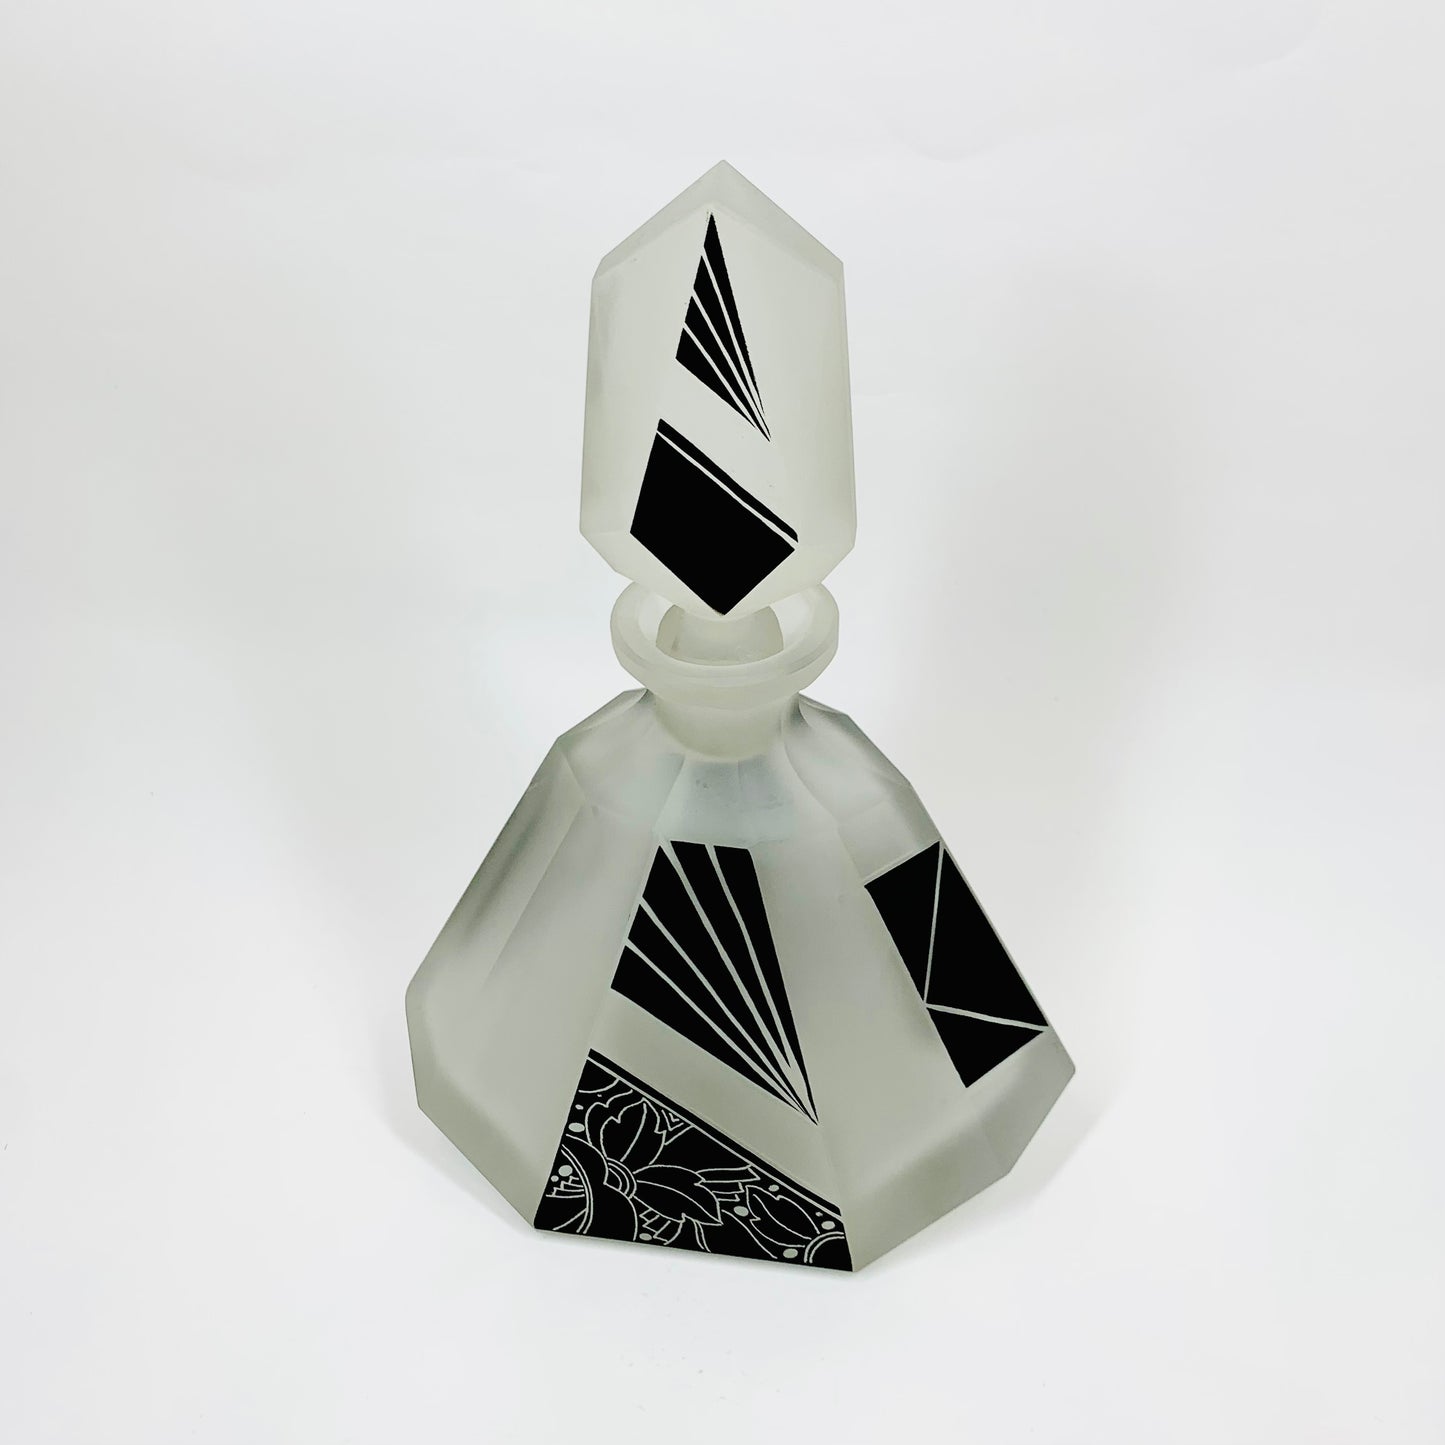 Extremely extremely rare antique Art Deco black enamel decanter satin glass set by Karl Palda